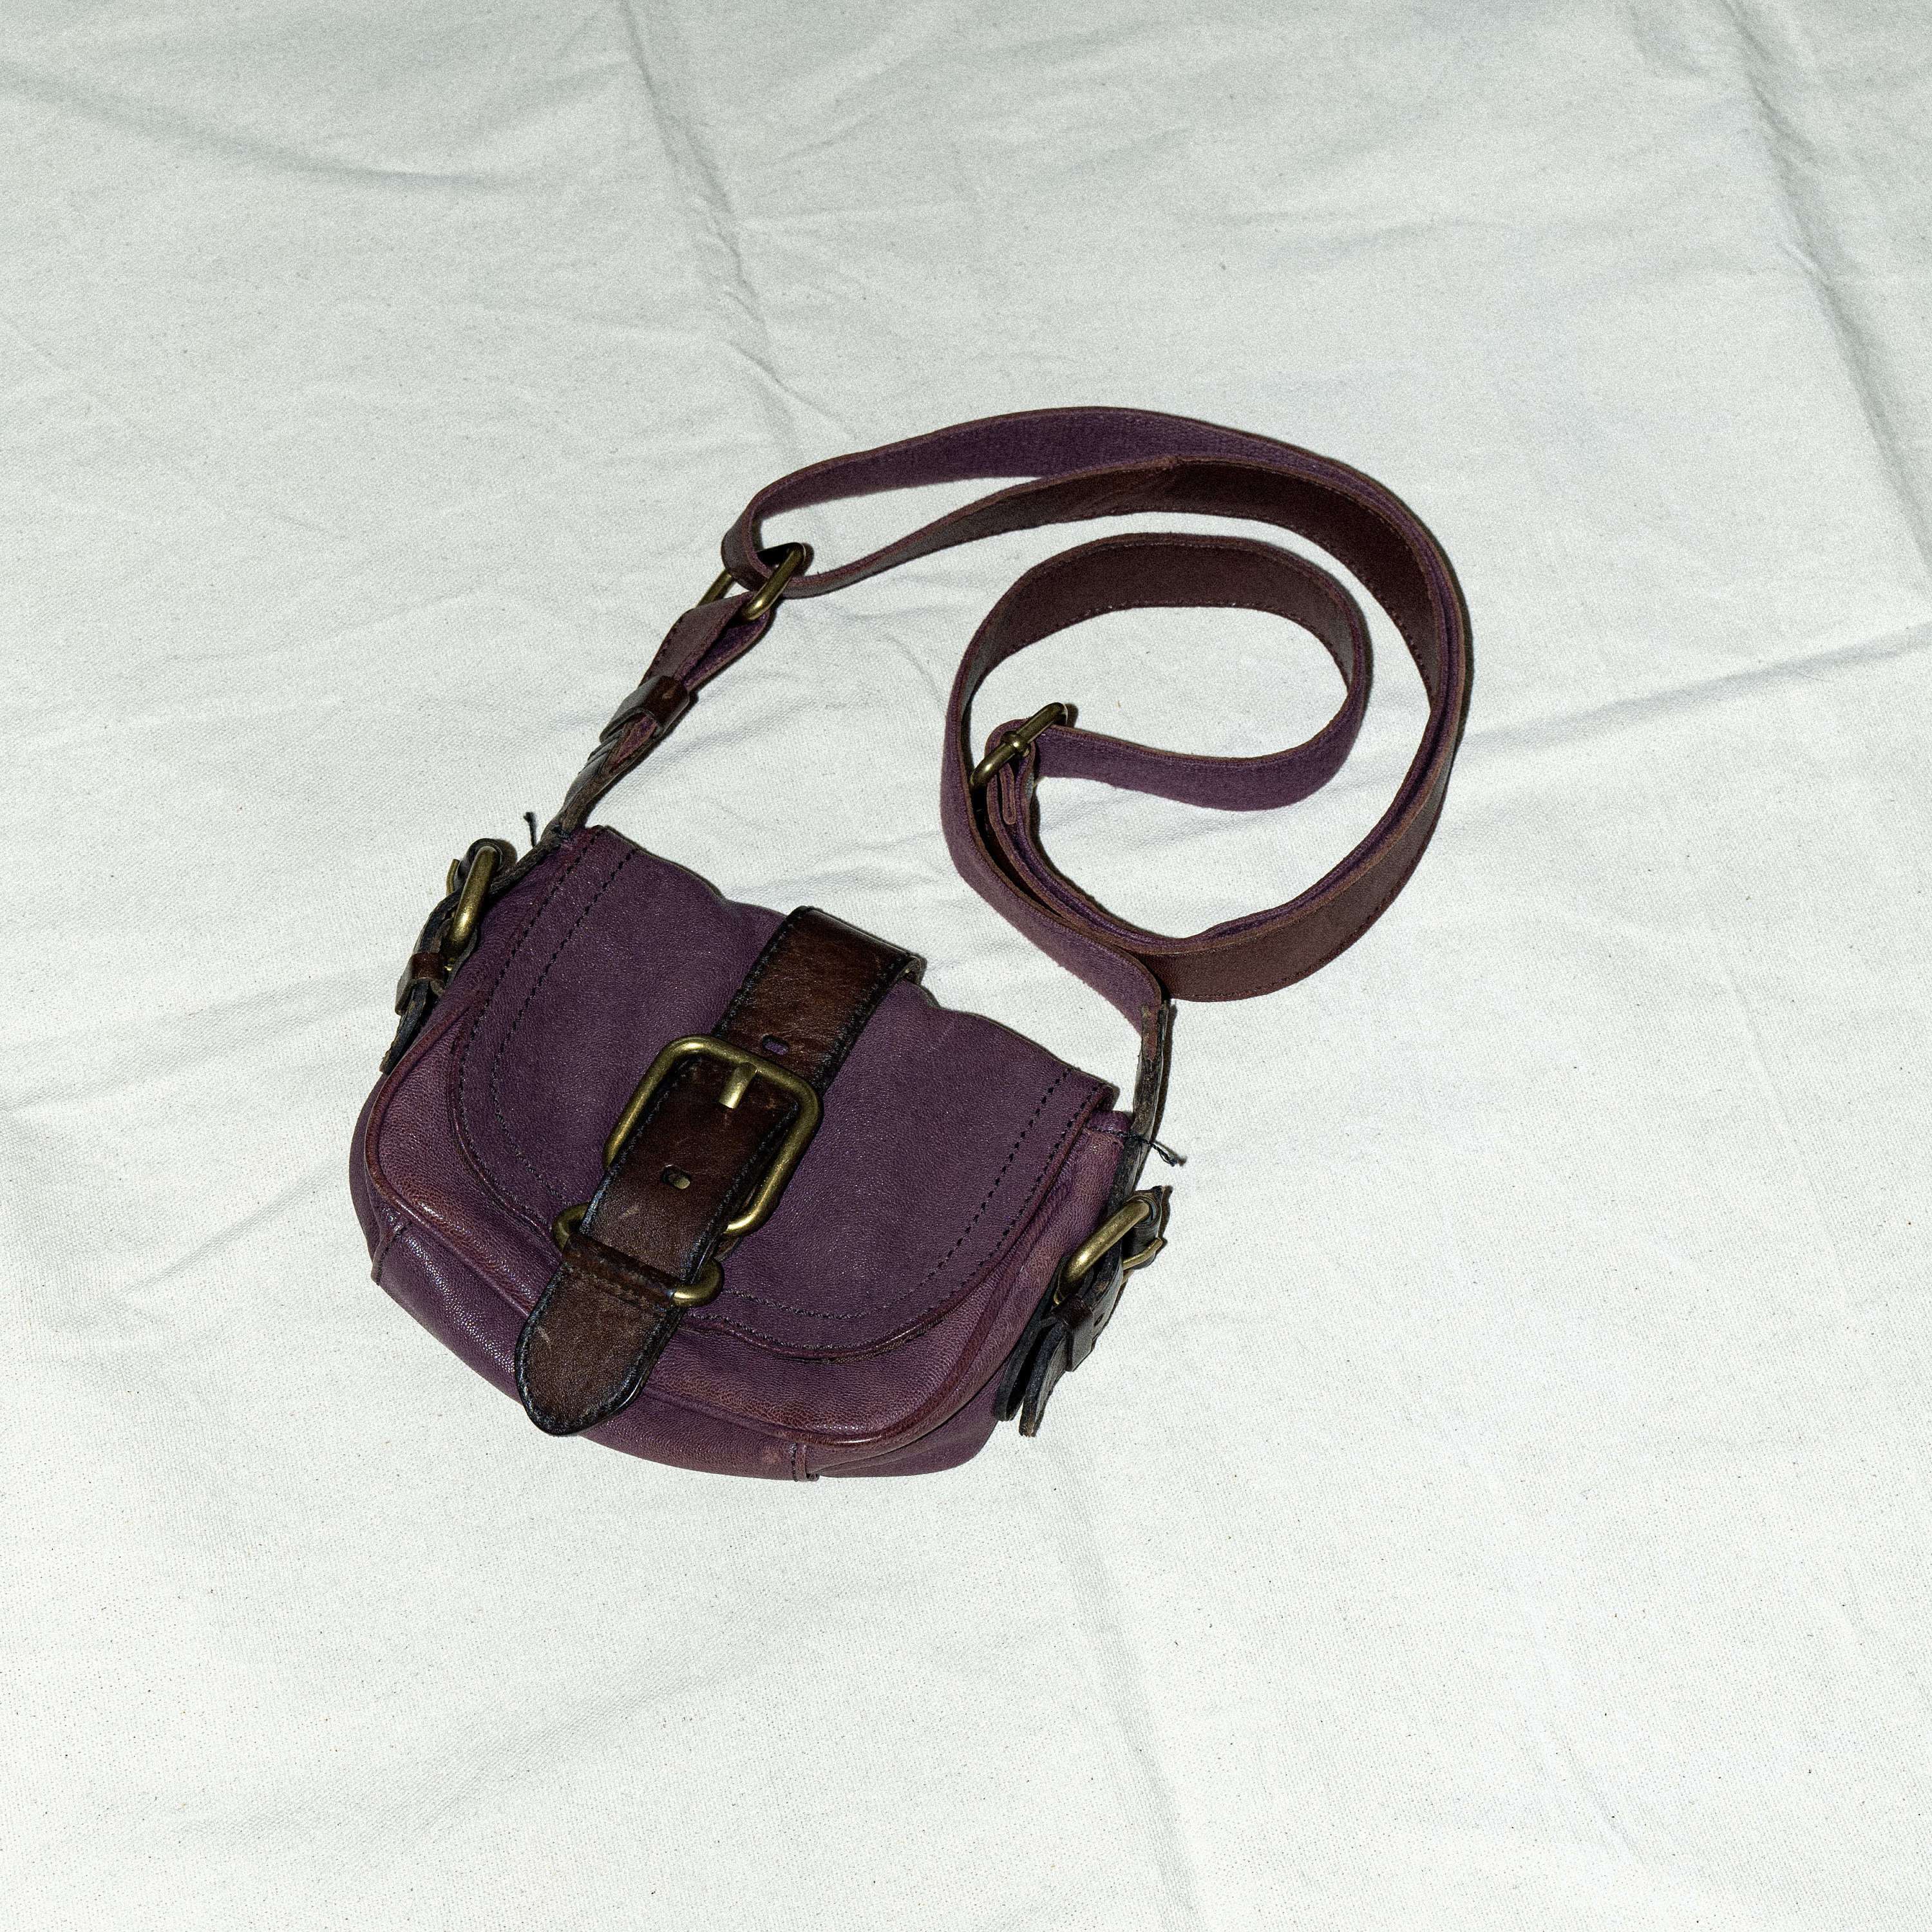 Buy New Arrival Handbags for Women Online - Fossil